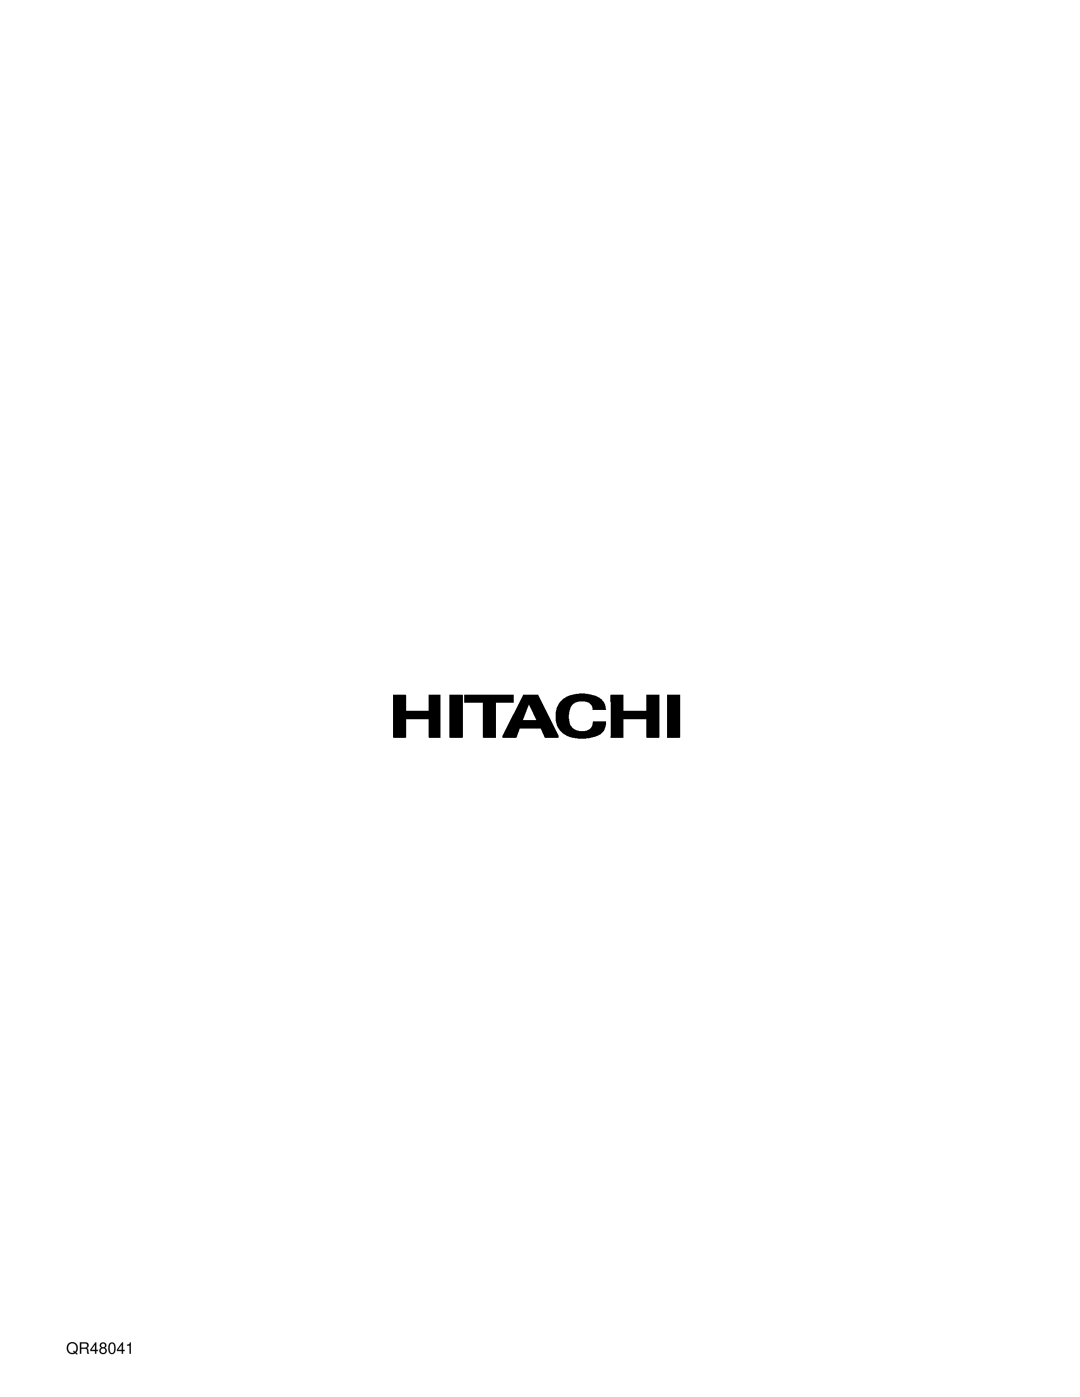 Hitachi 61UWX10B important safety instructions QR48041 